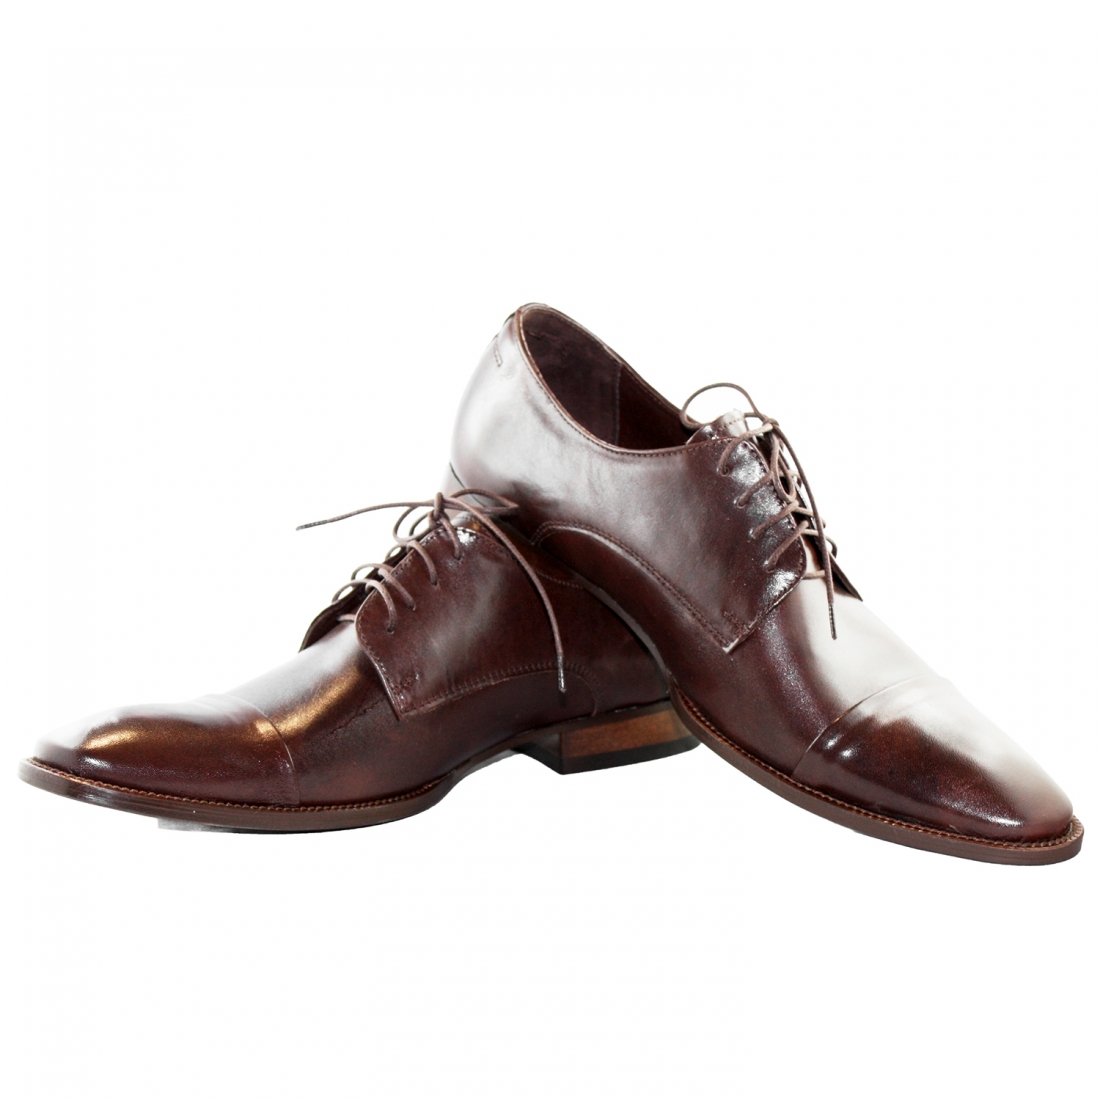 Modello Cognacello - Classic Shoes - Handmade Colorful Italian Leather Shoes